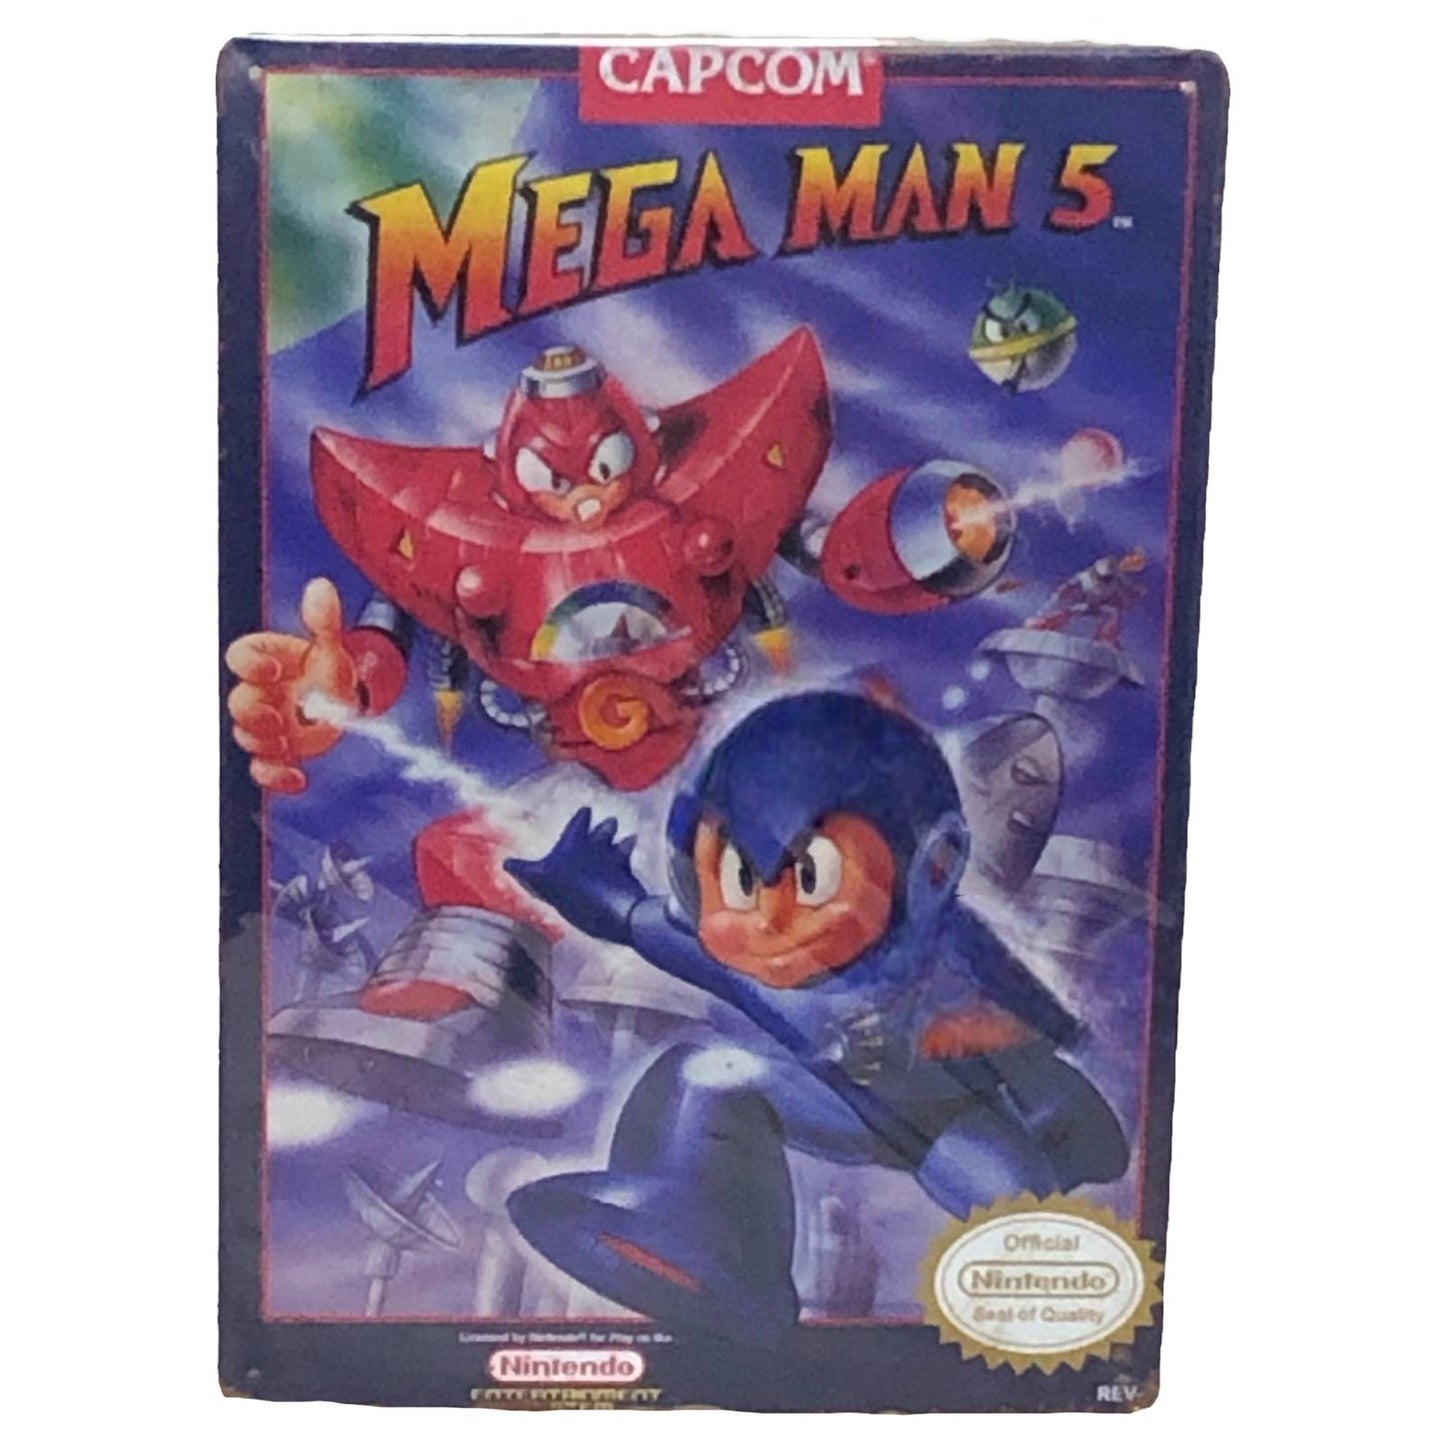 Mega Man 5 Video Game Cover Metal Tin Sign 8"x12"